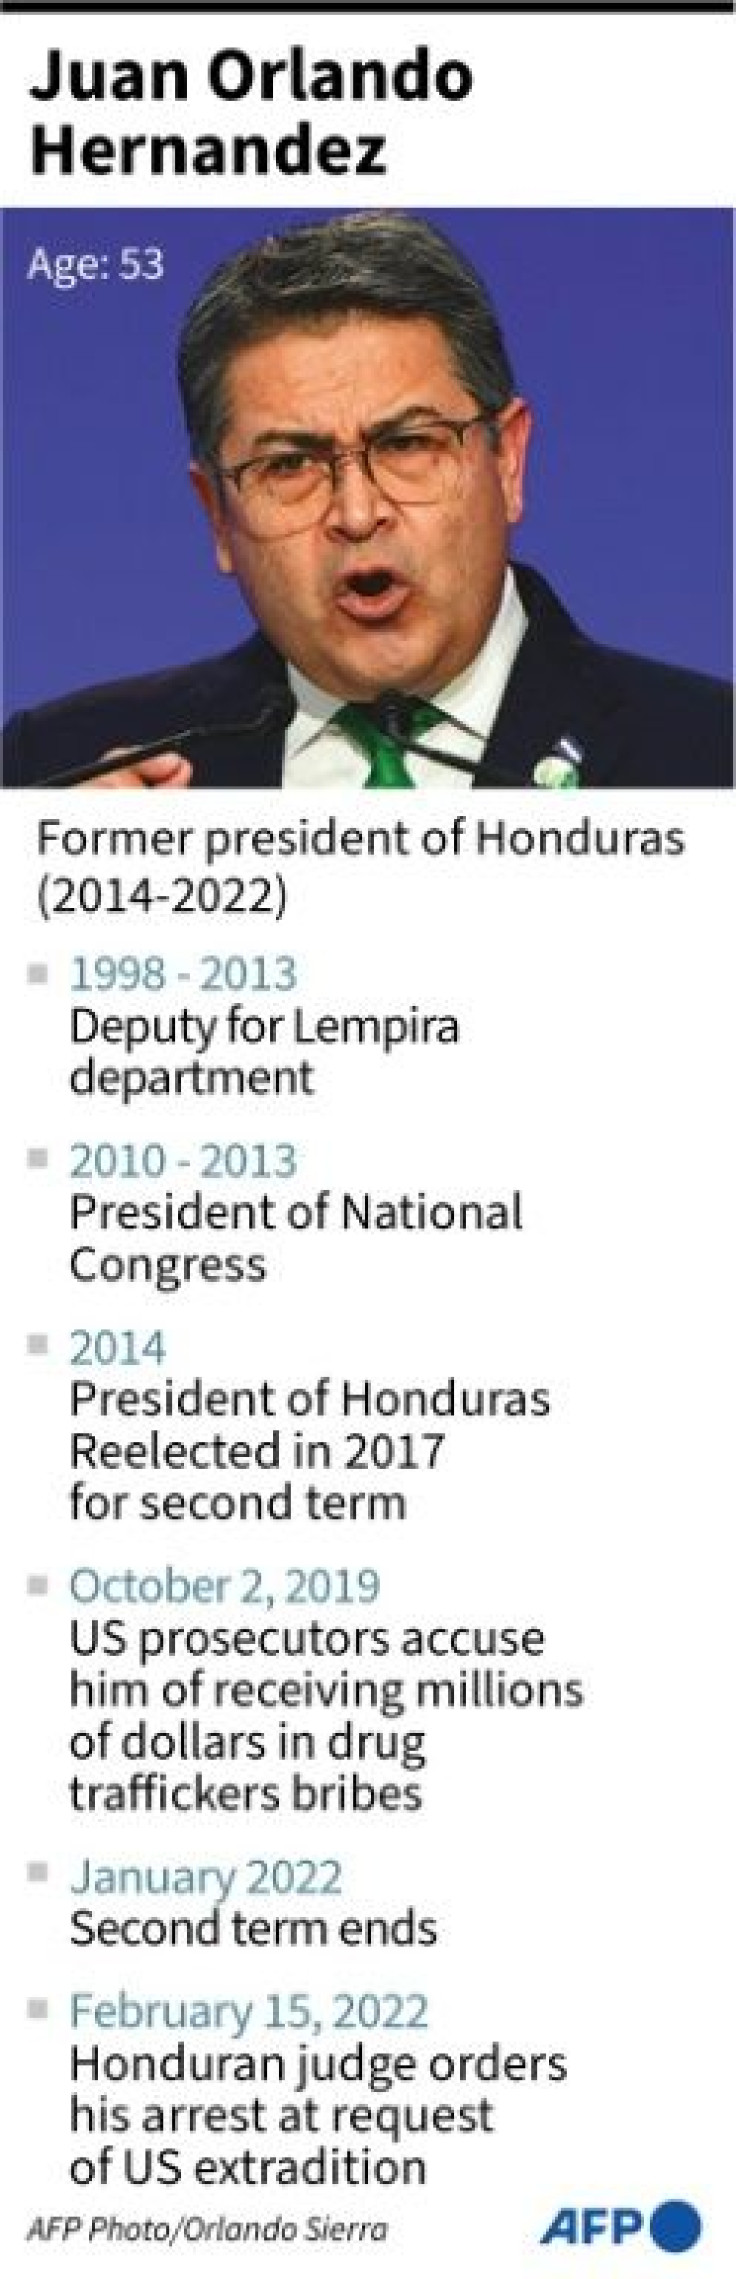 Former president of Honduras, Juan Orlando Hernandez